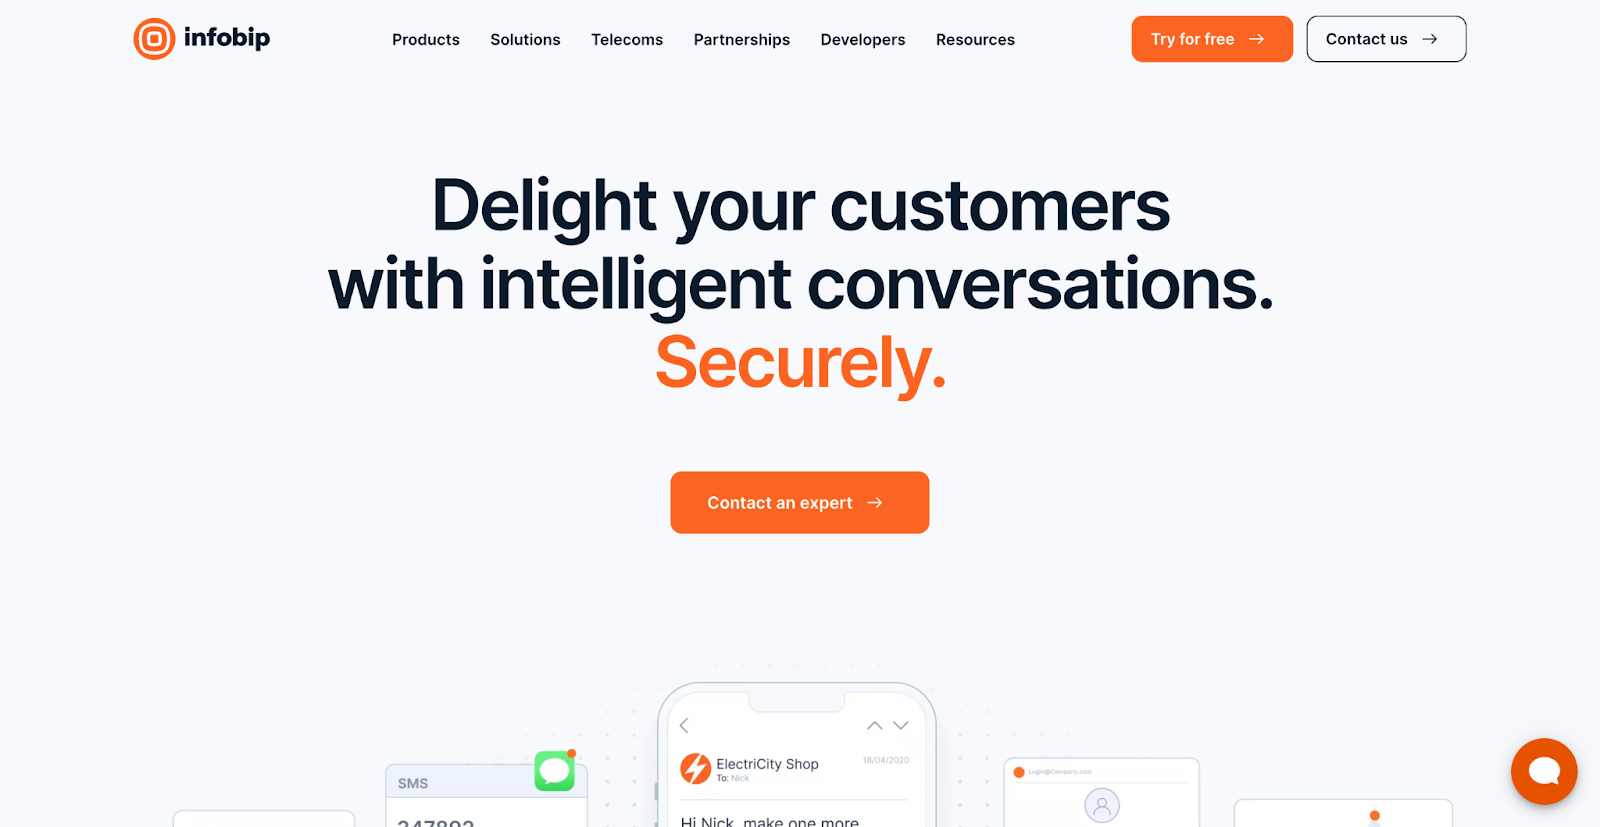 Infobip global communication platform for customer experience